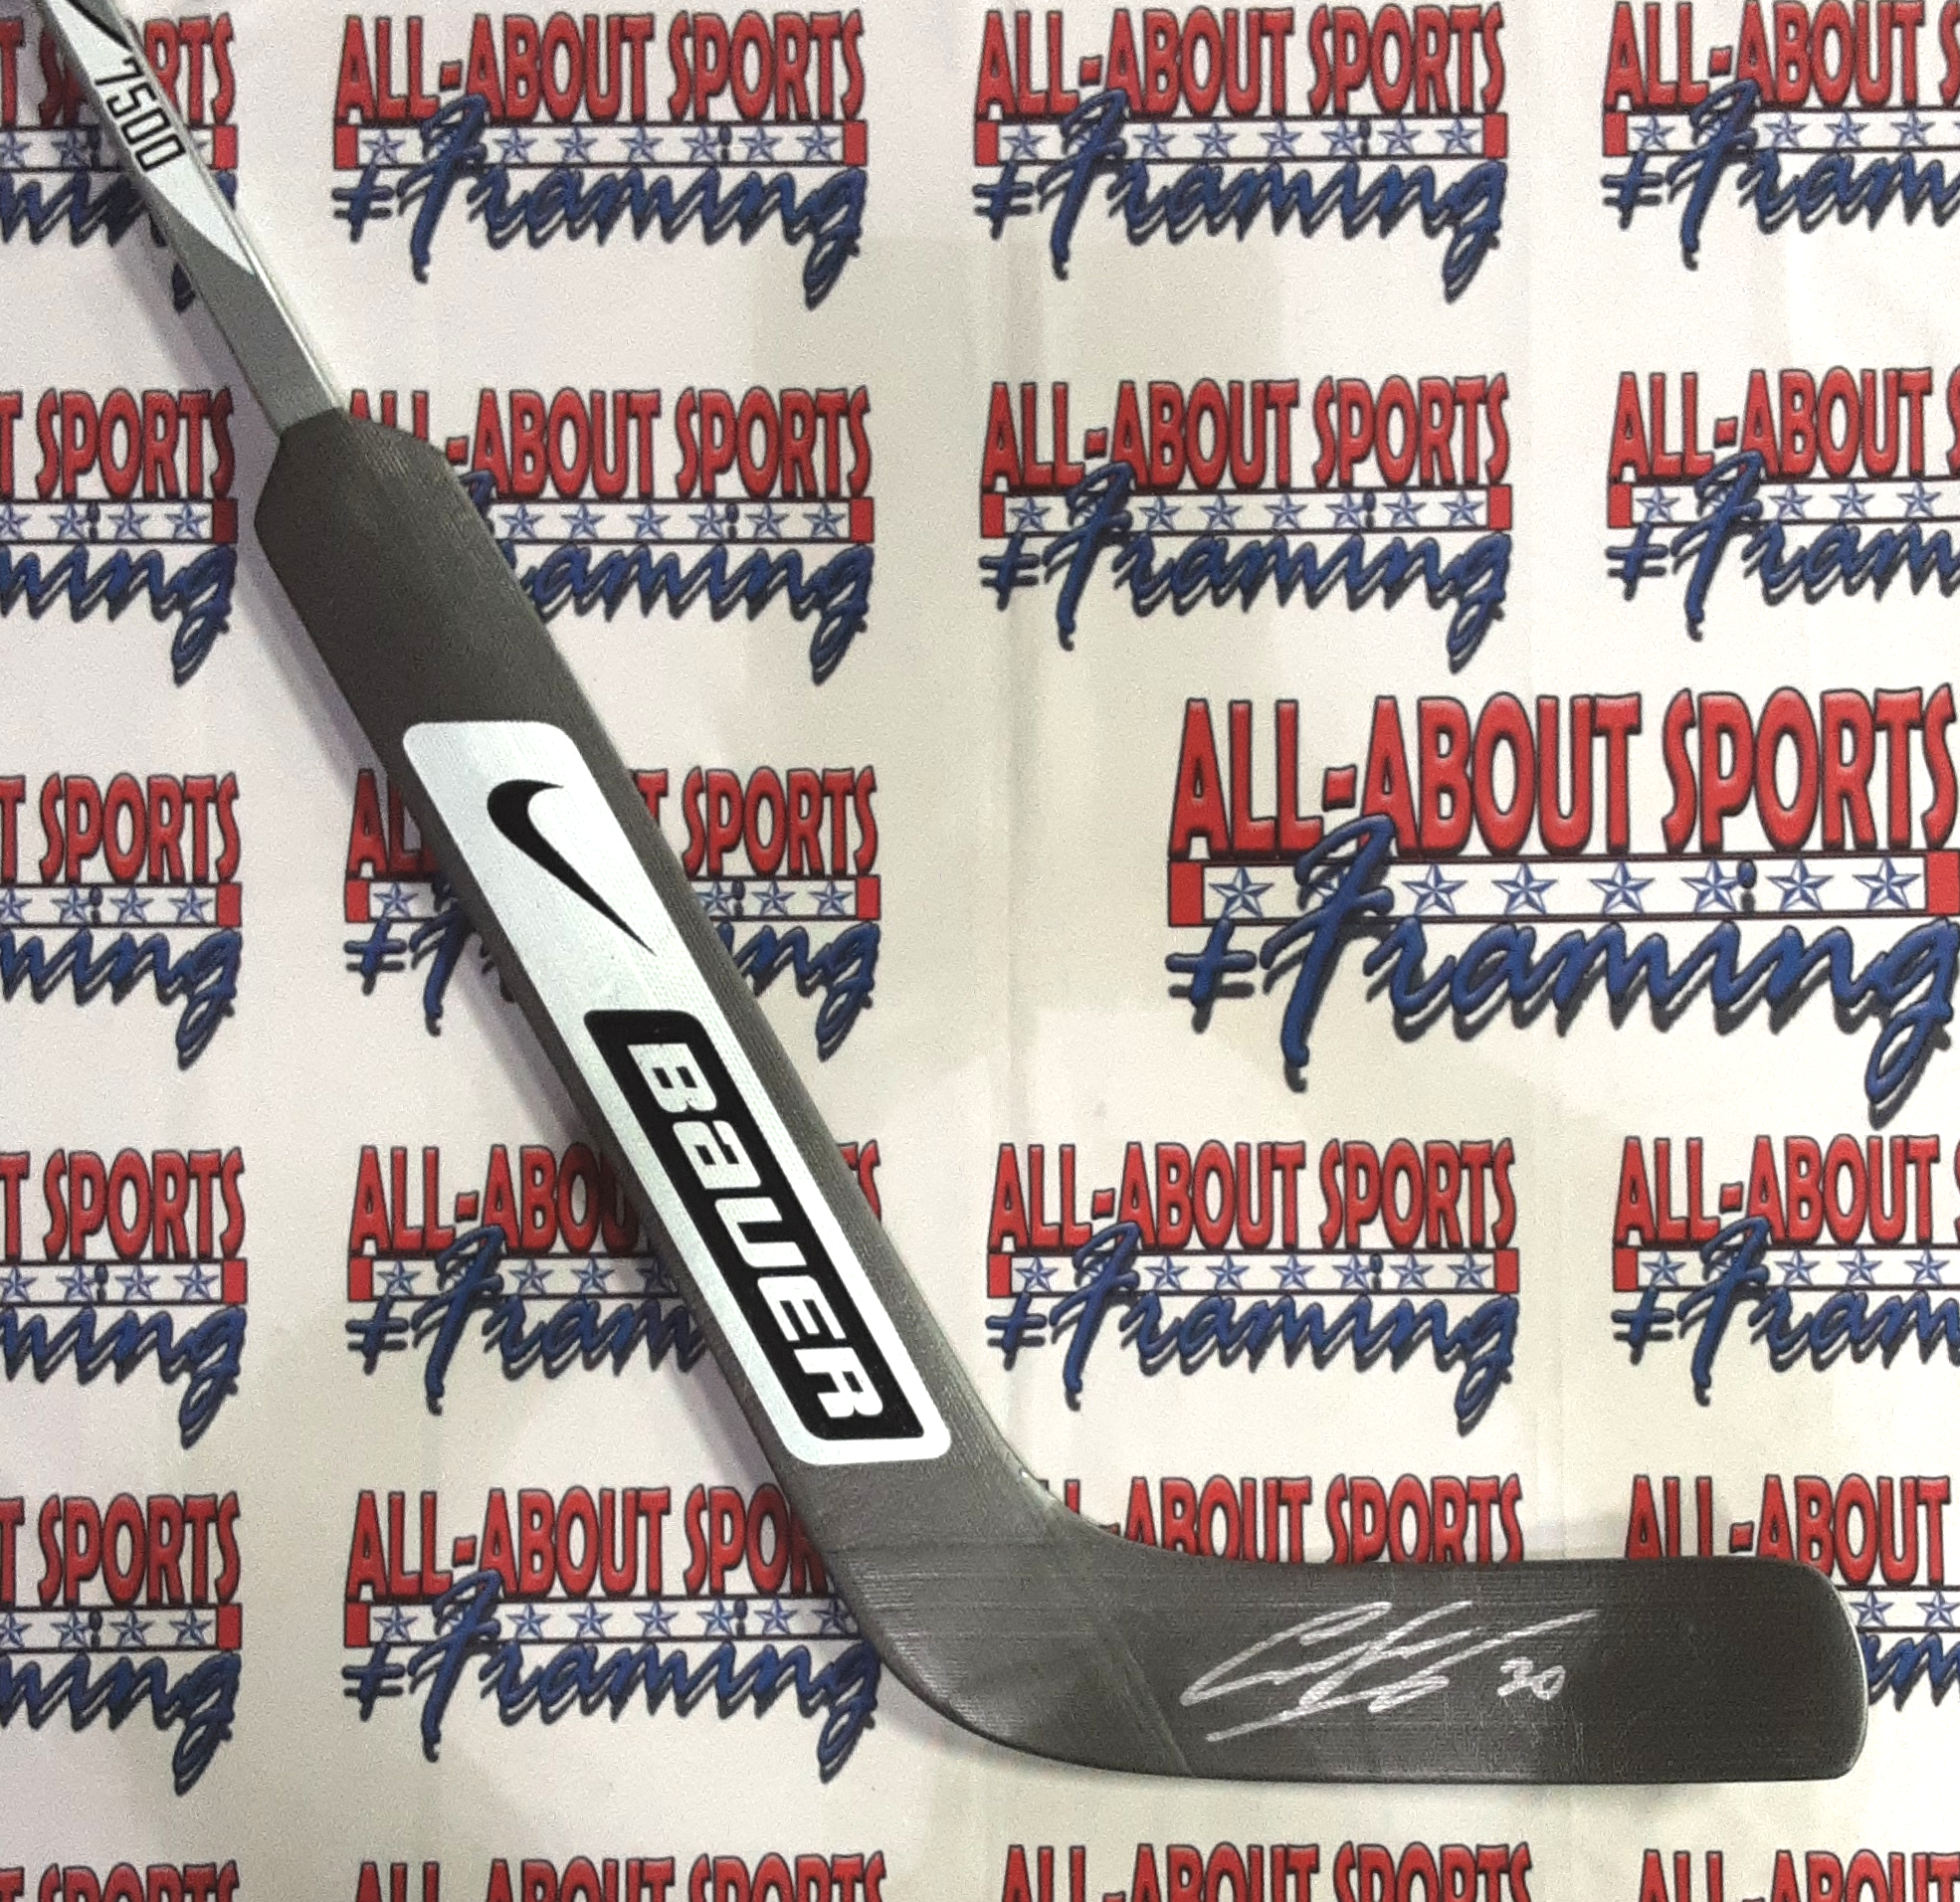 Ilya Sorokin Authentic Signed Hockey Goalie Stick Autographed JSA